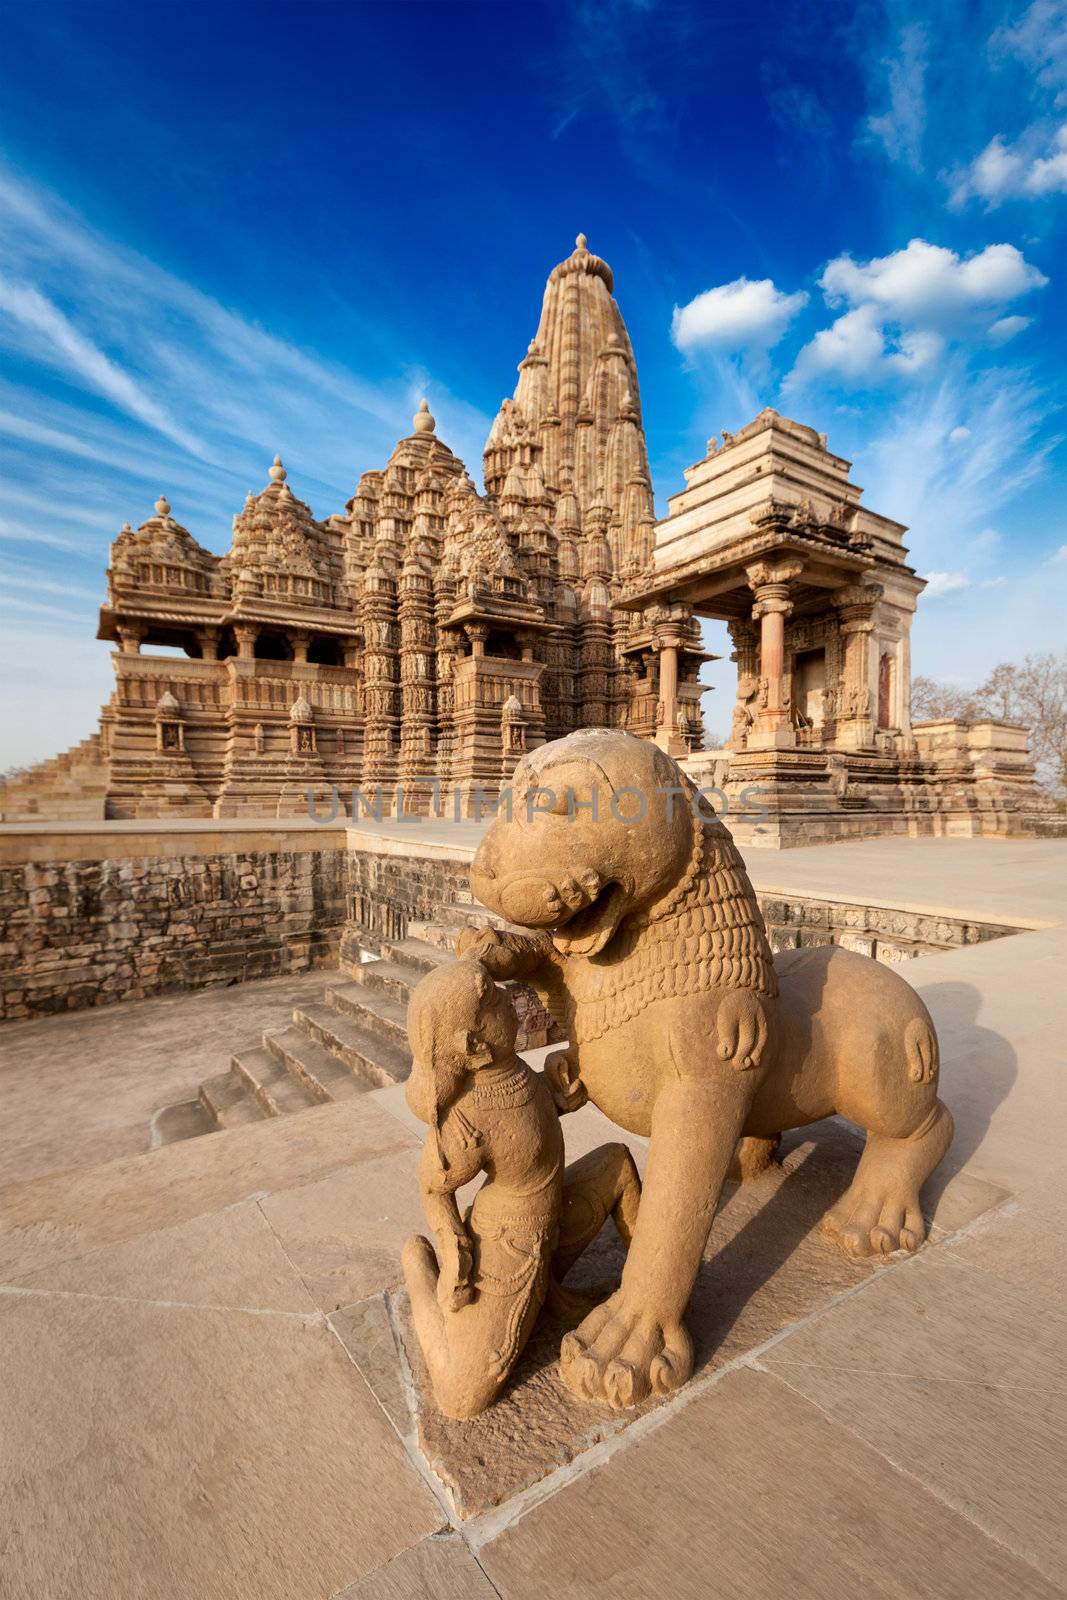 King and lion fight statue and Kandariya Mahadev temple by dimol